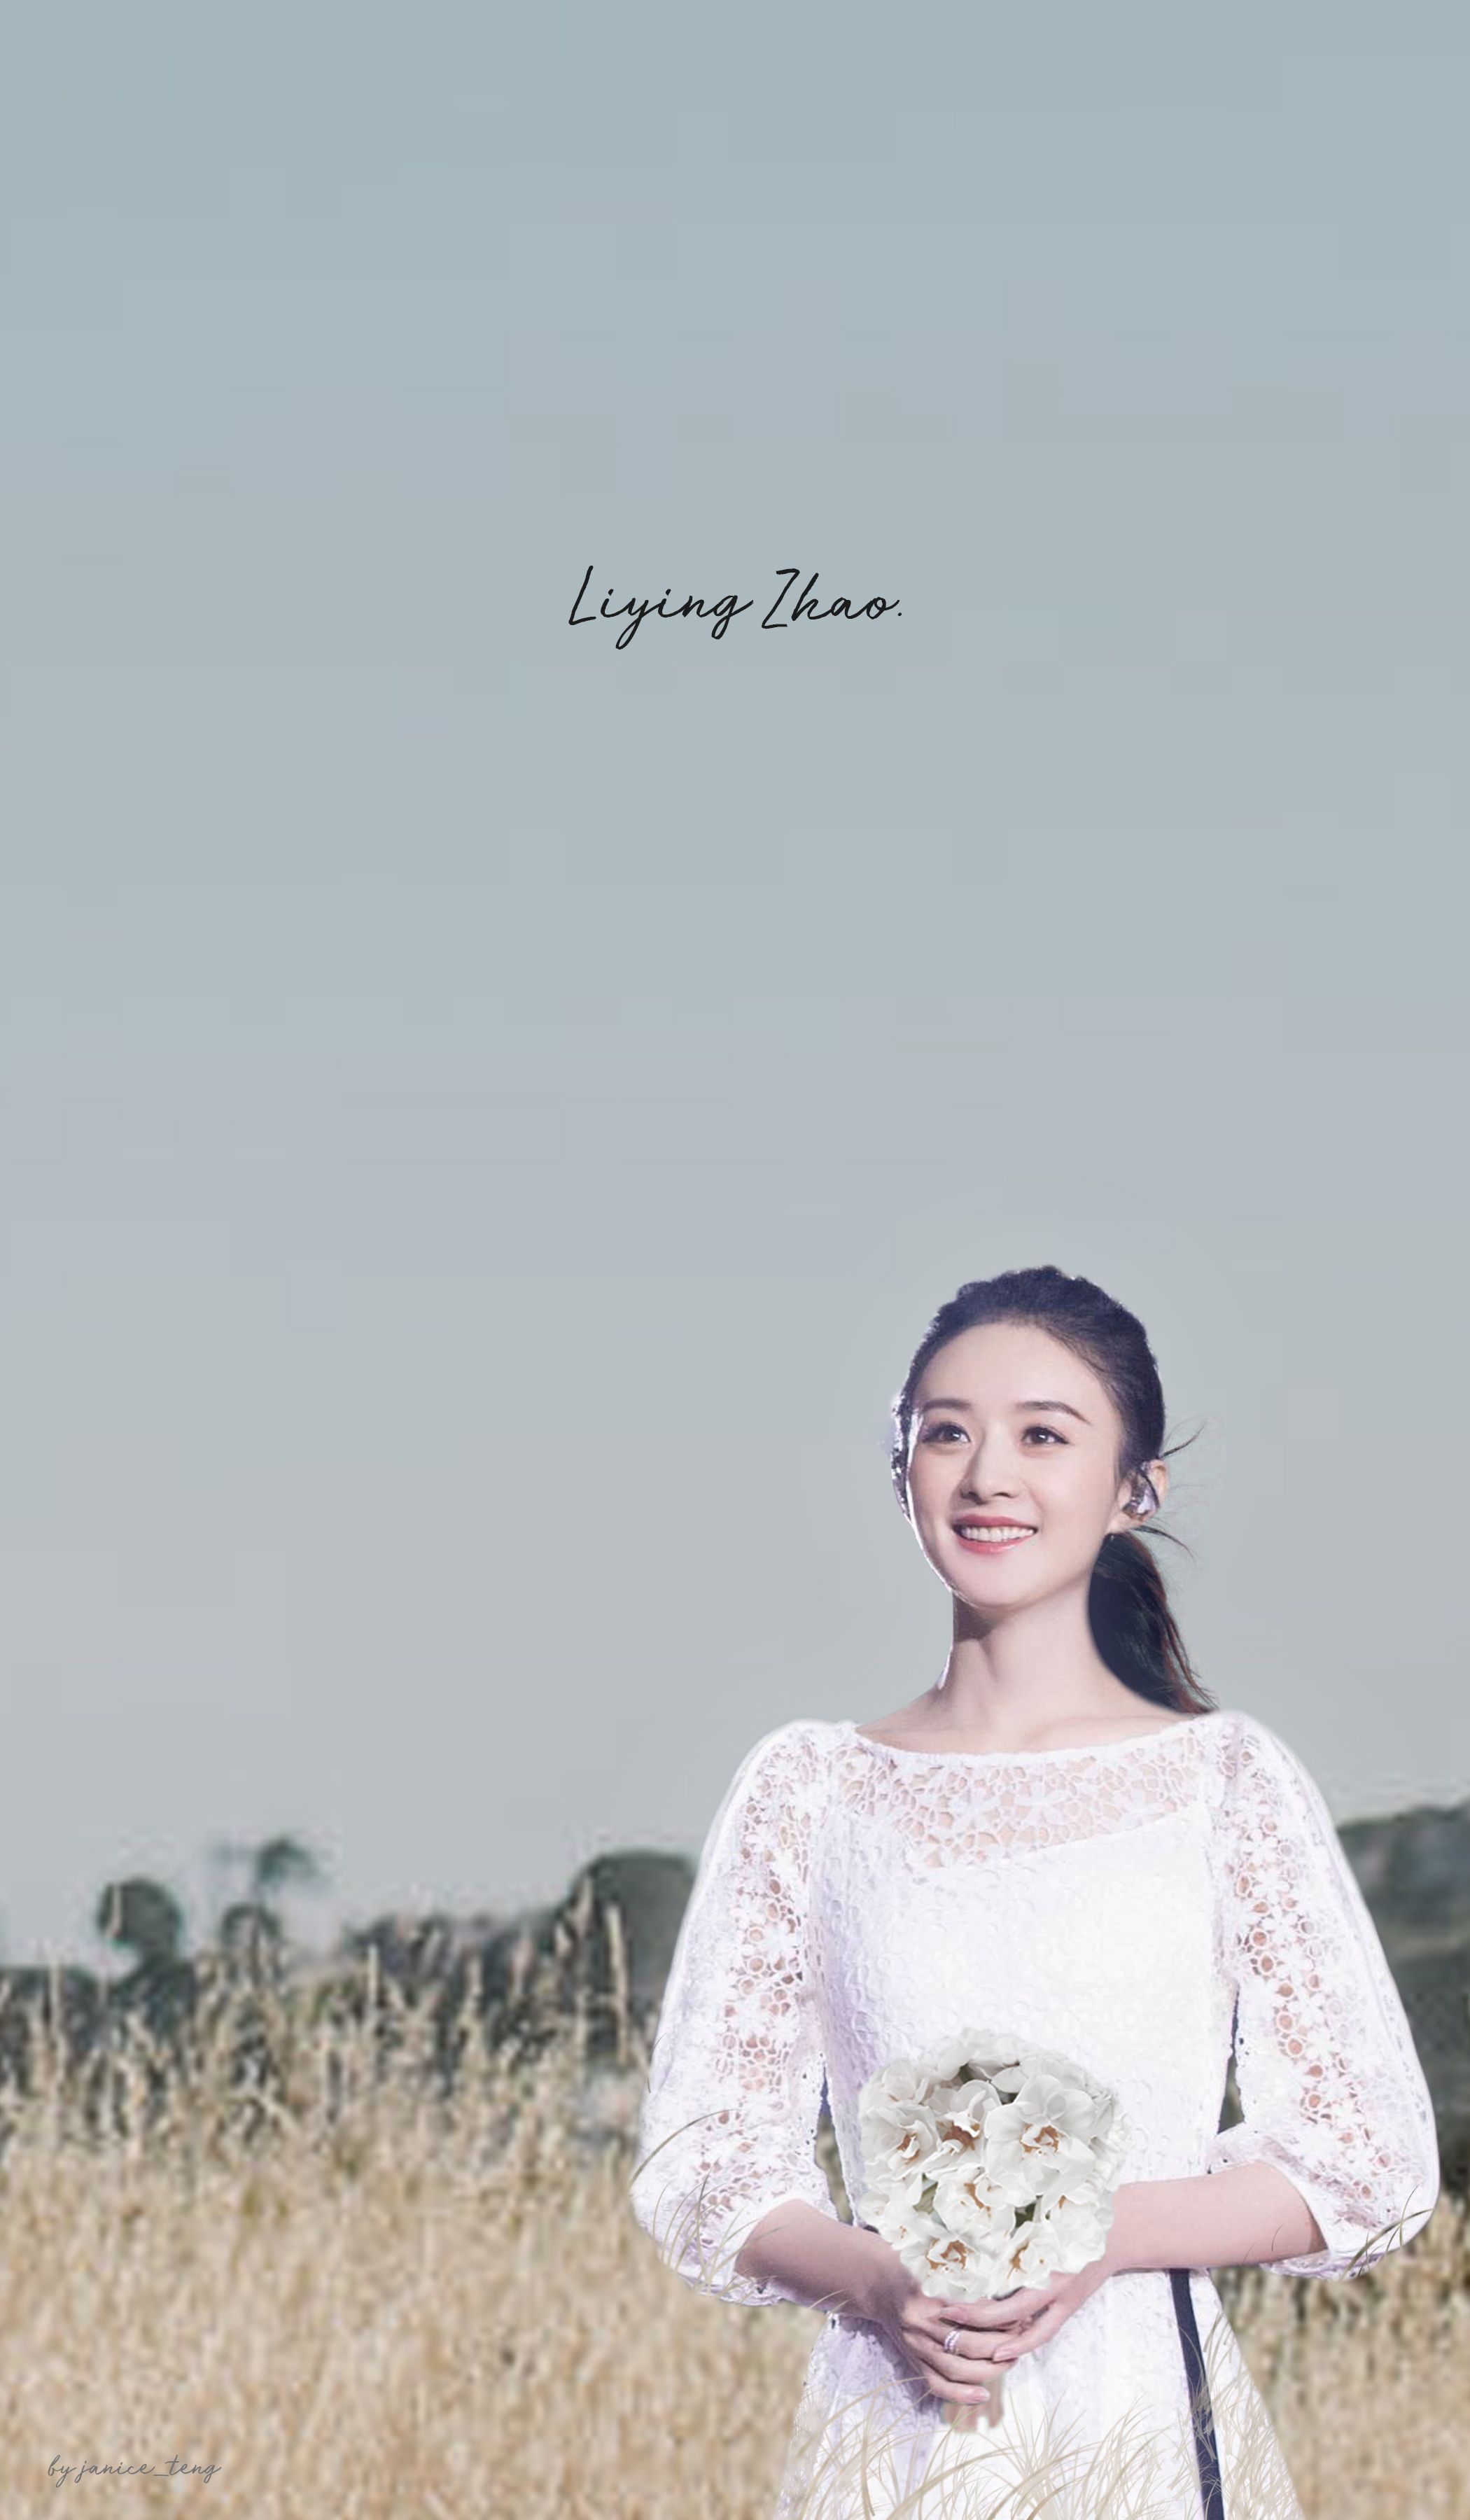 Liying Zhao Lockscreen Idol Wallpaper Tops Lace